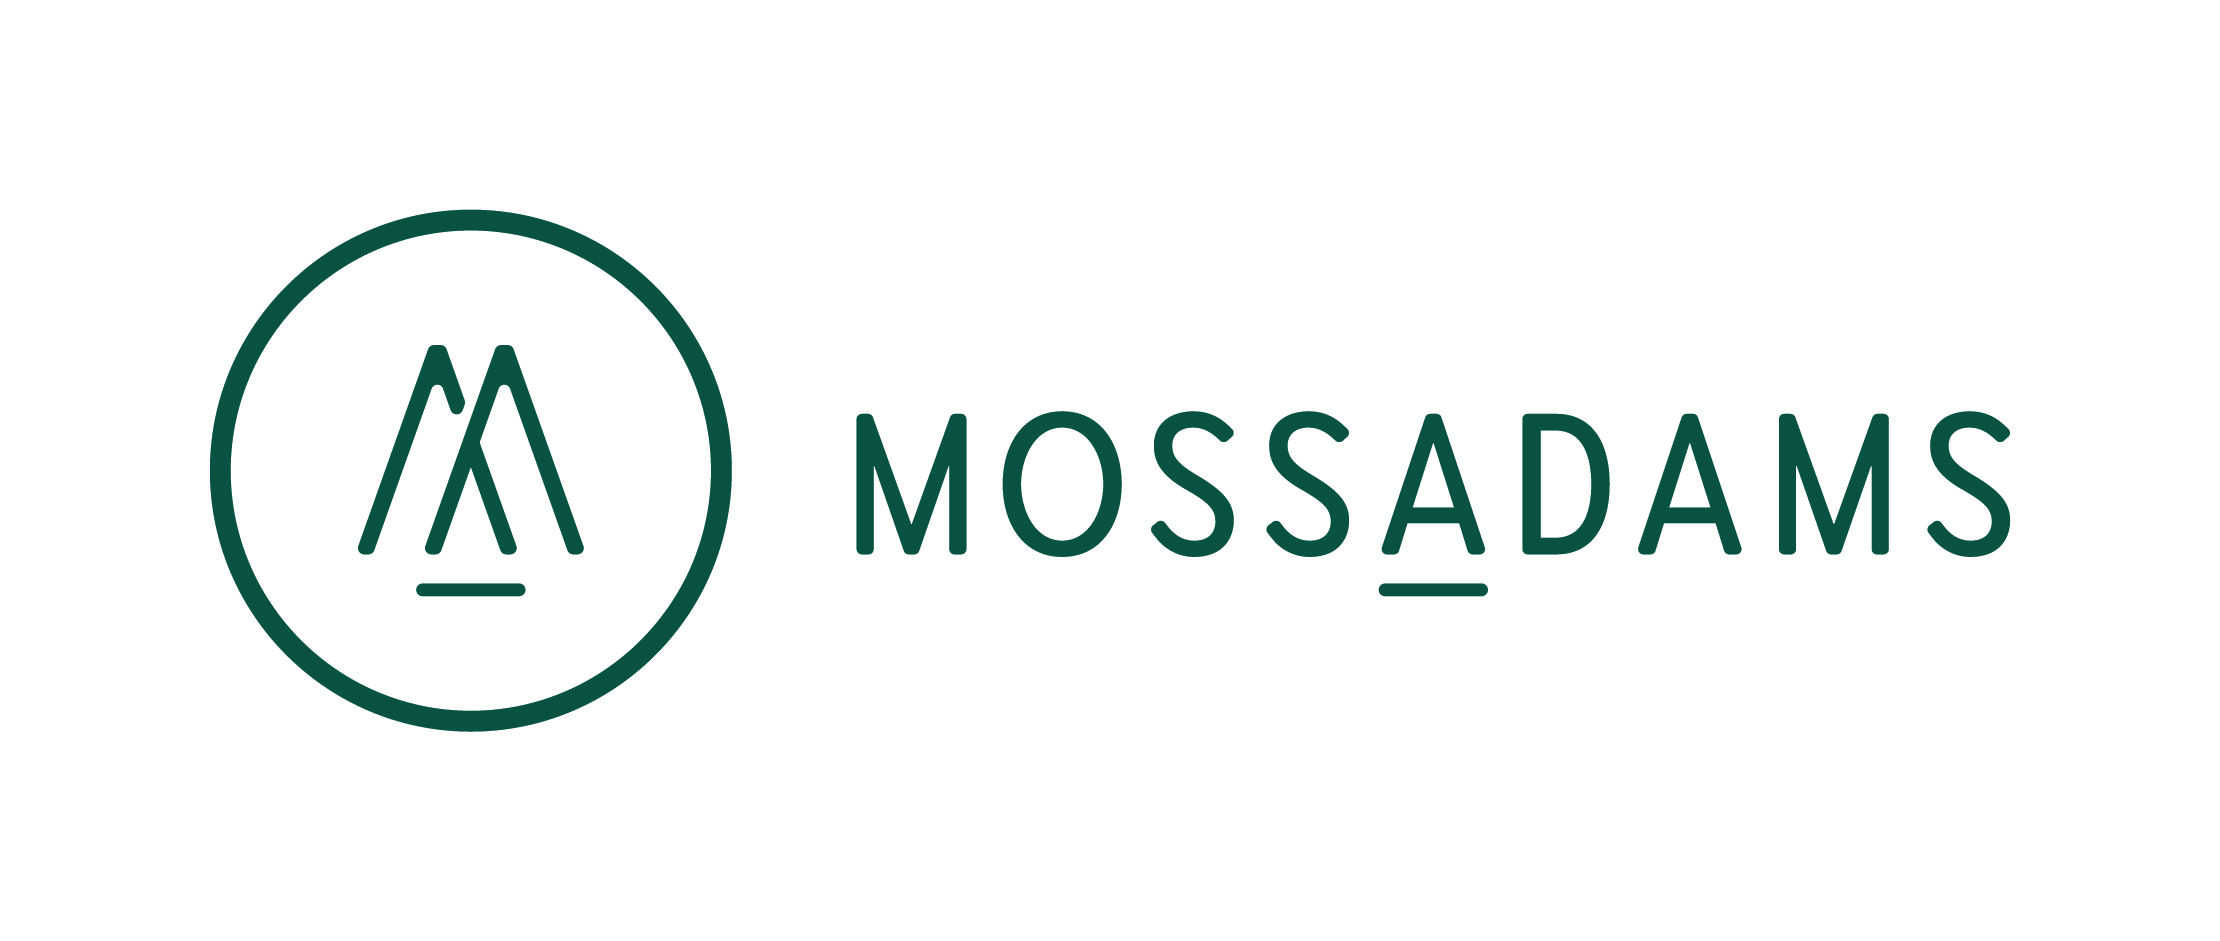 MossAdams_Logo_Logotype_PMS7722